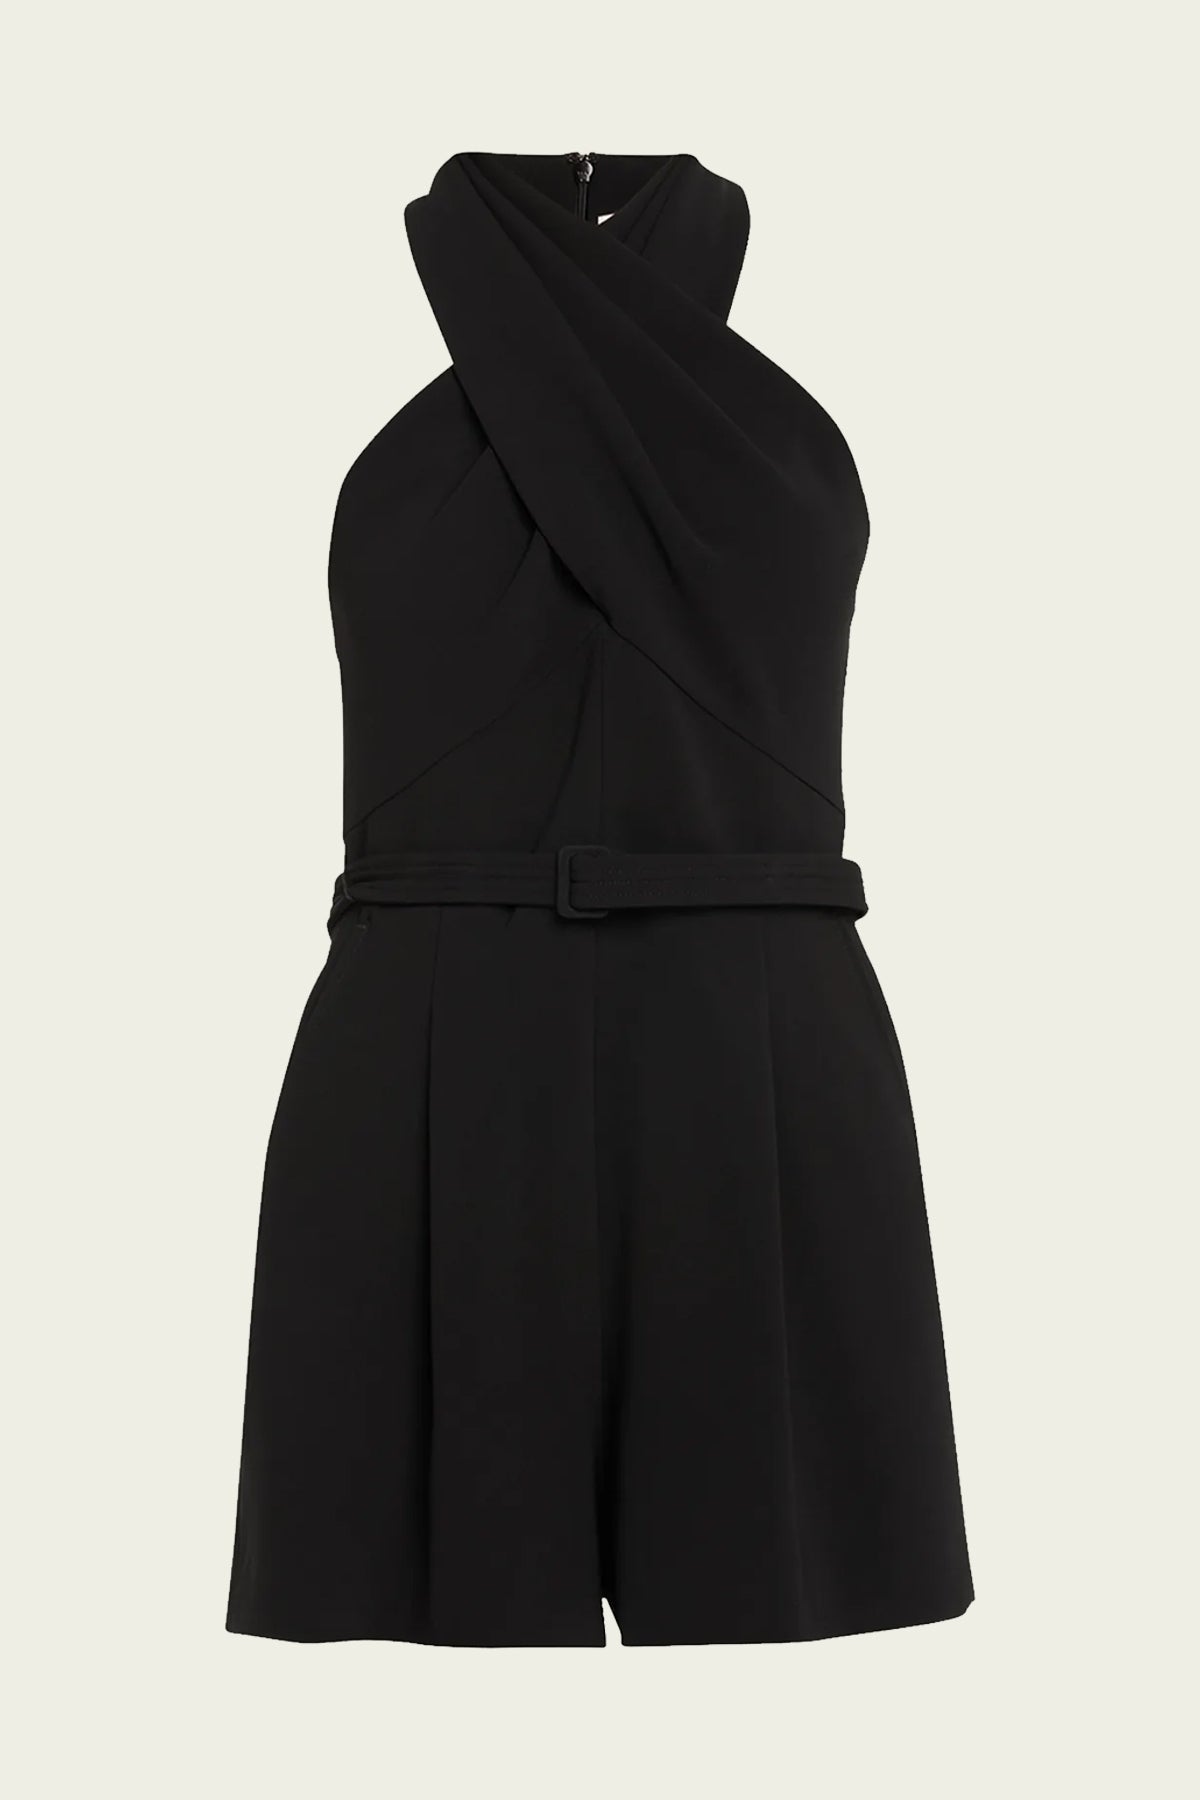 Mallory Short Jumpsuit in Black - shop-olivia.com